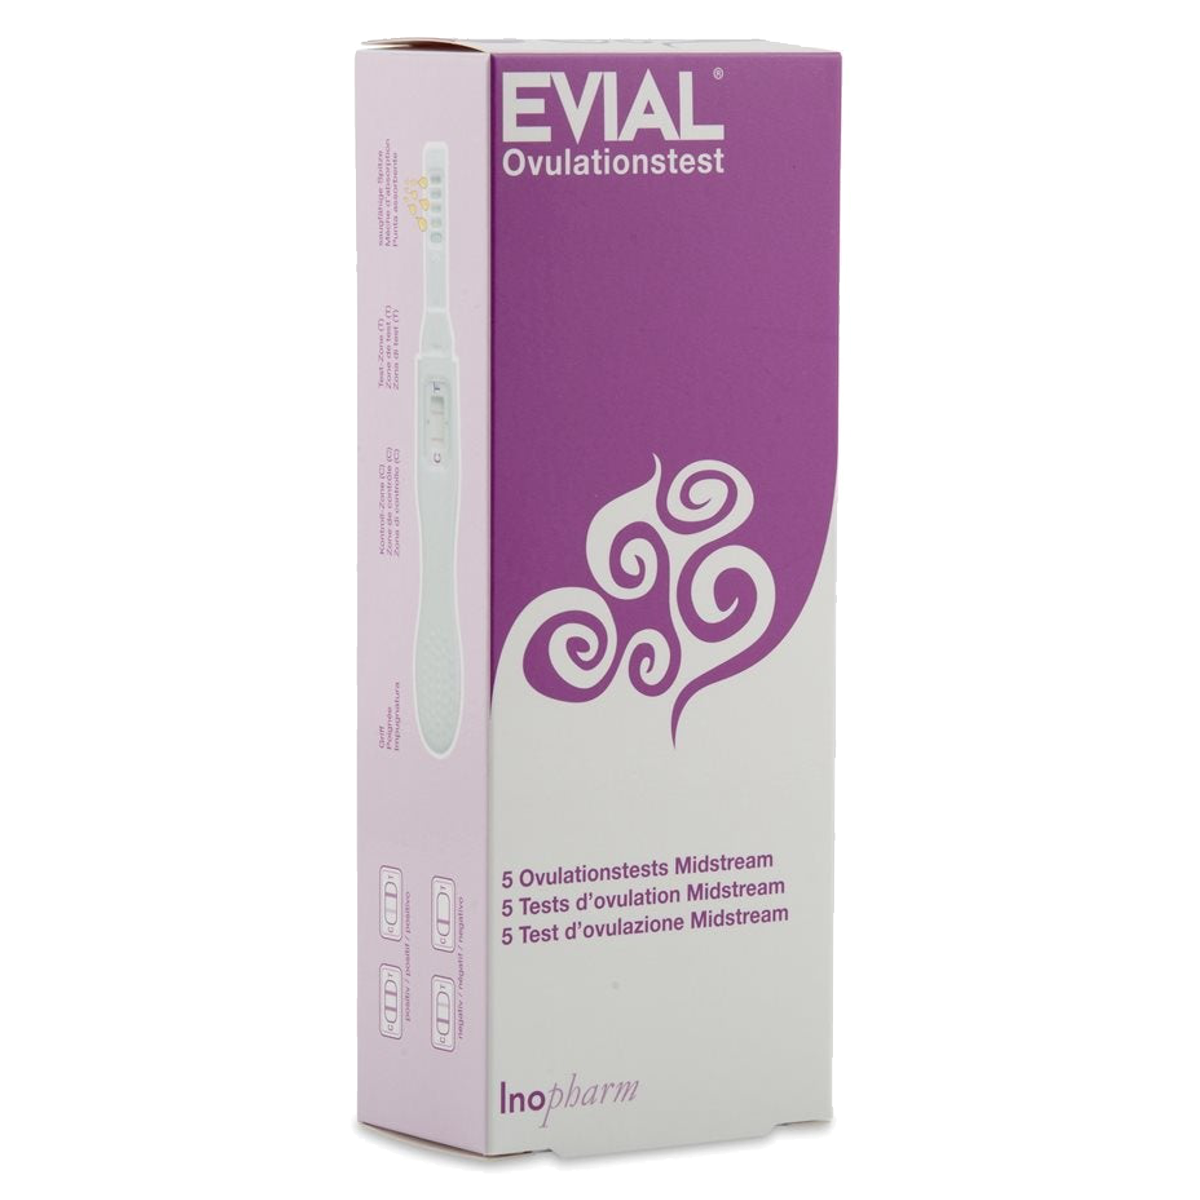 Evial Ovulationstest Midstream 5 Stück